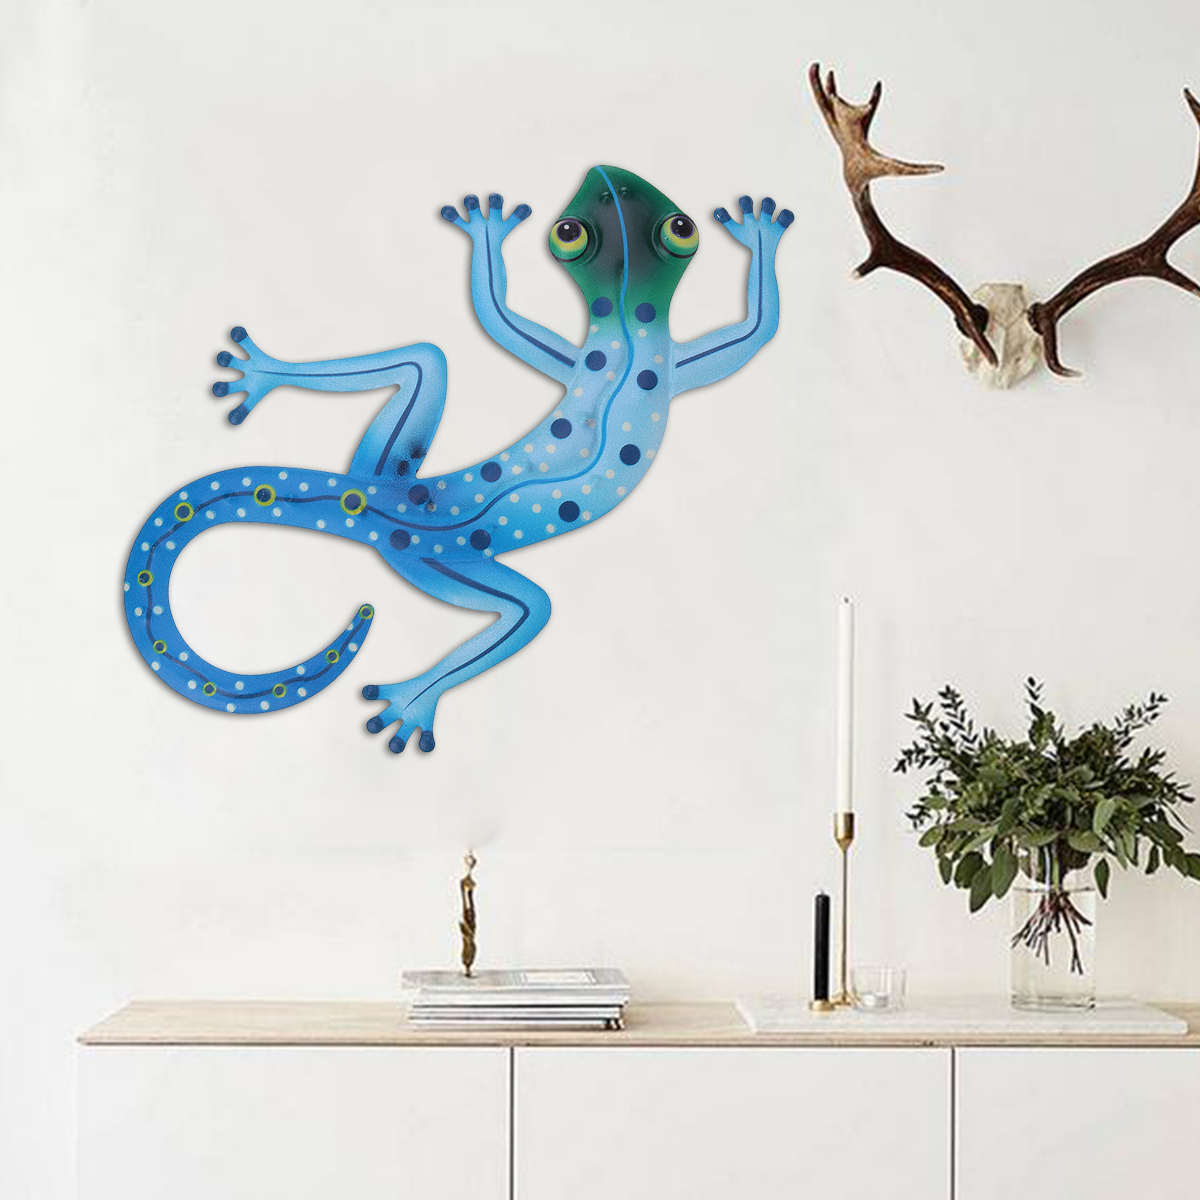 Wall-Hanging-Iron-Animal-Wall-Art-Lizard-Indoor-Garden-Home-Room-Decor-1753095